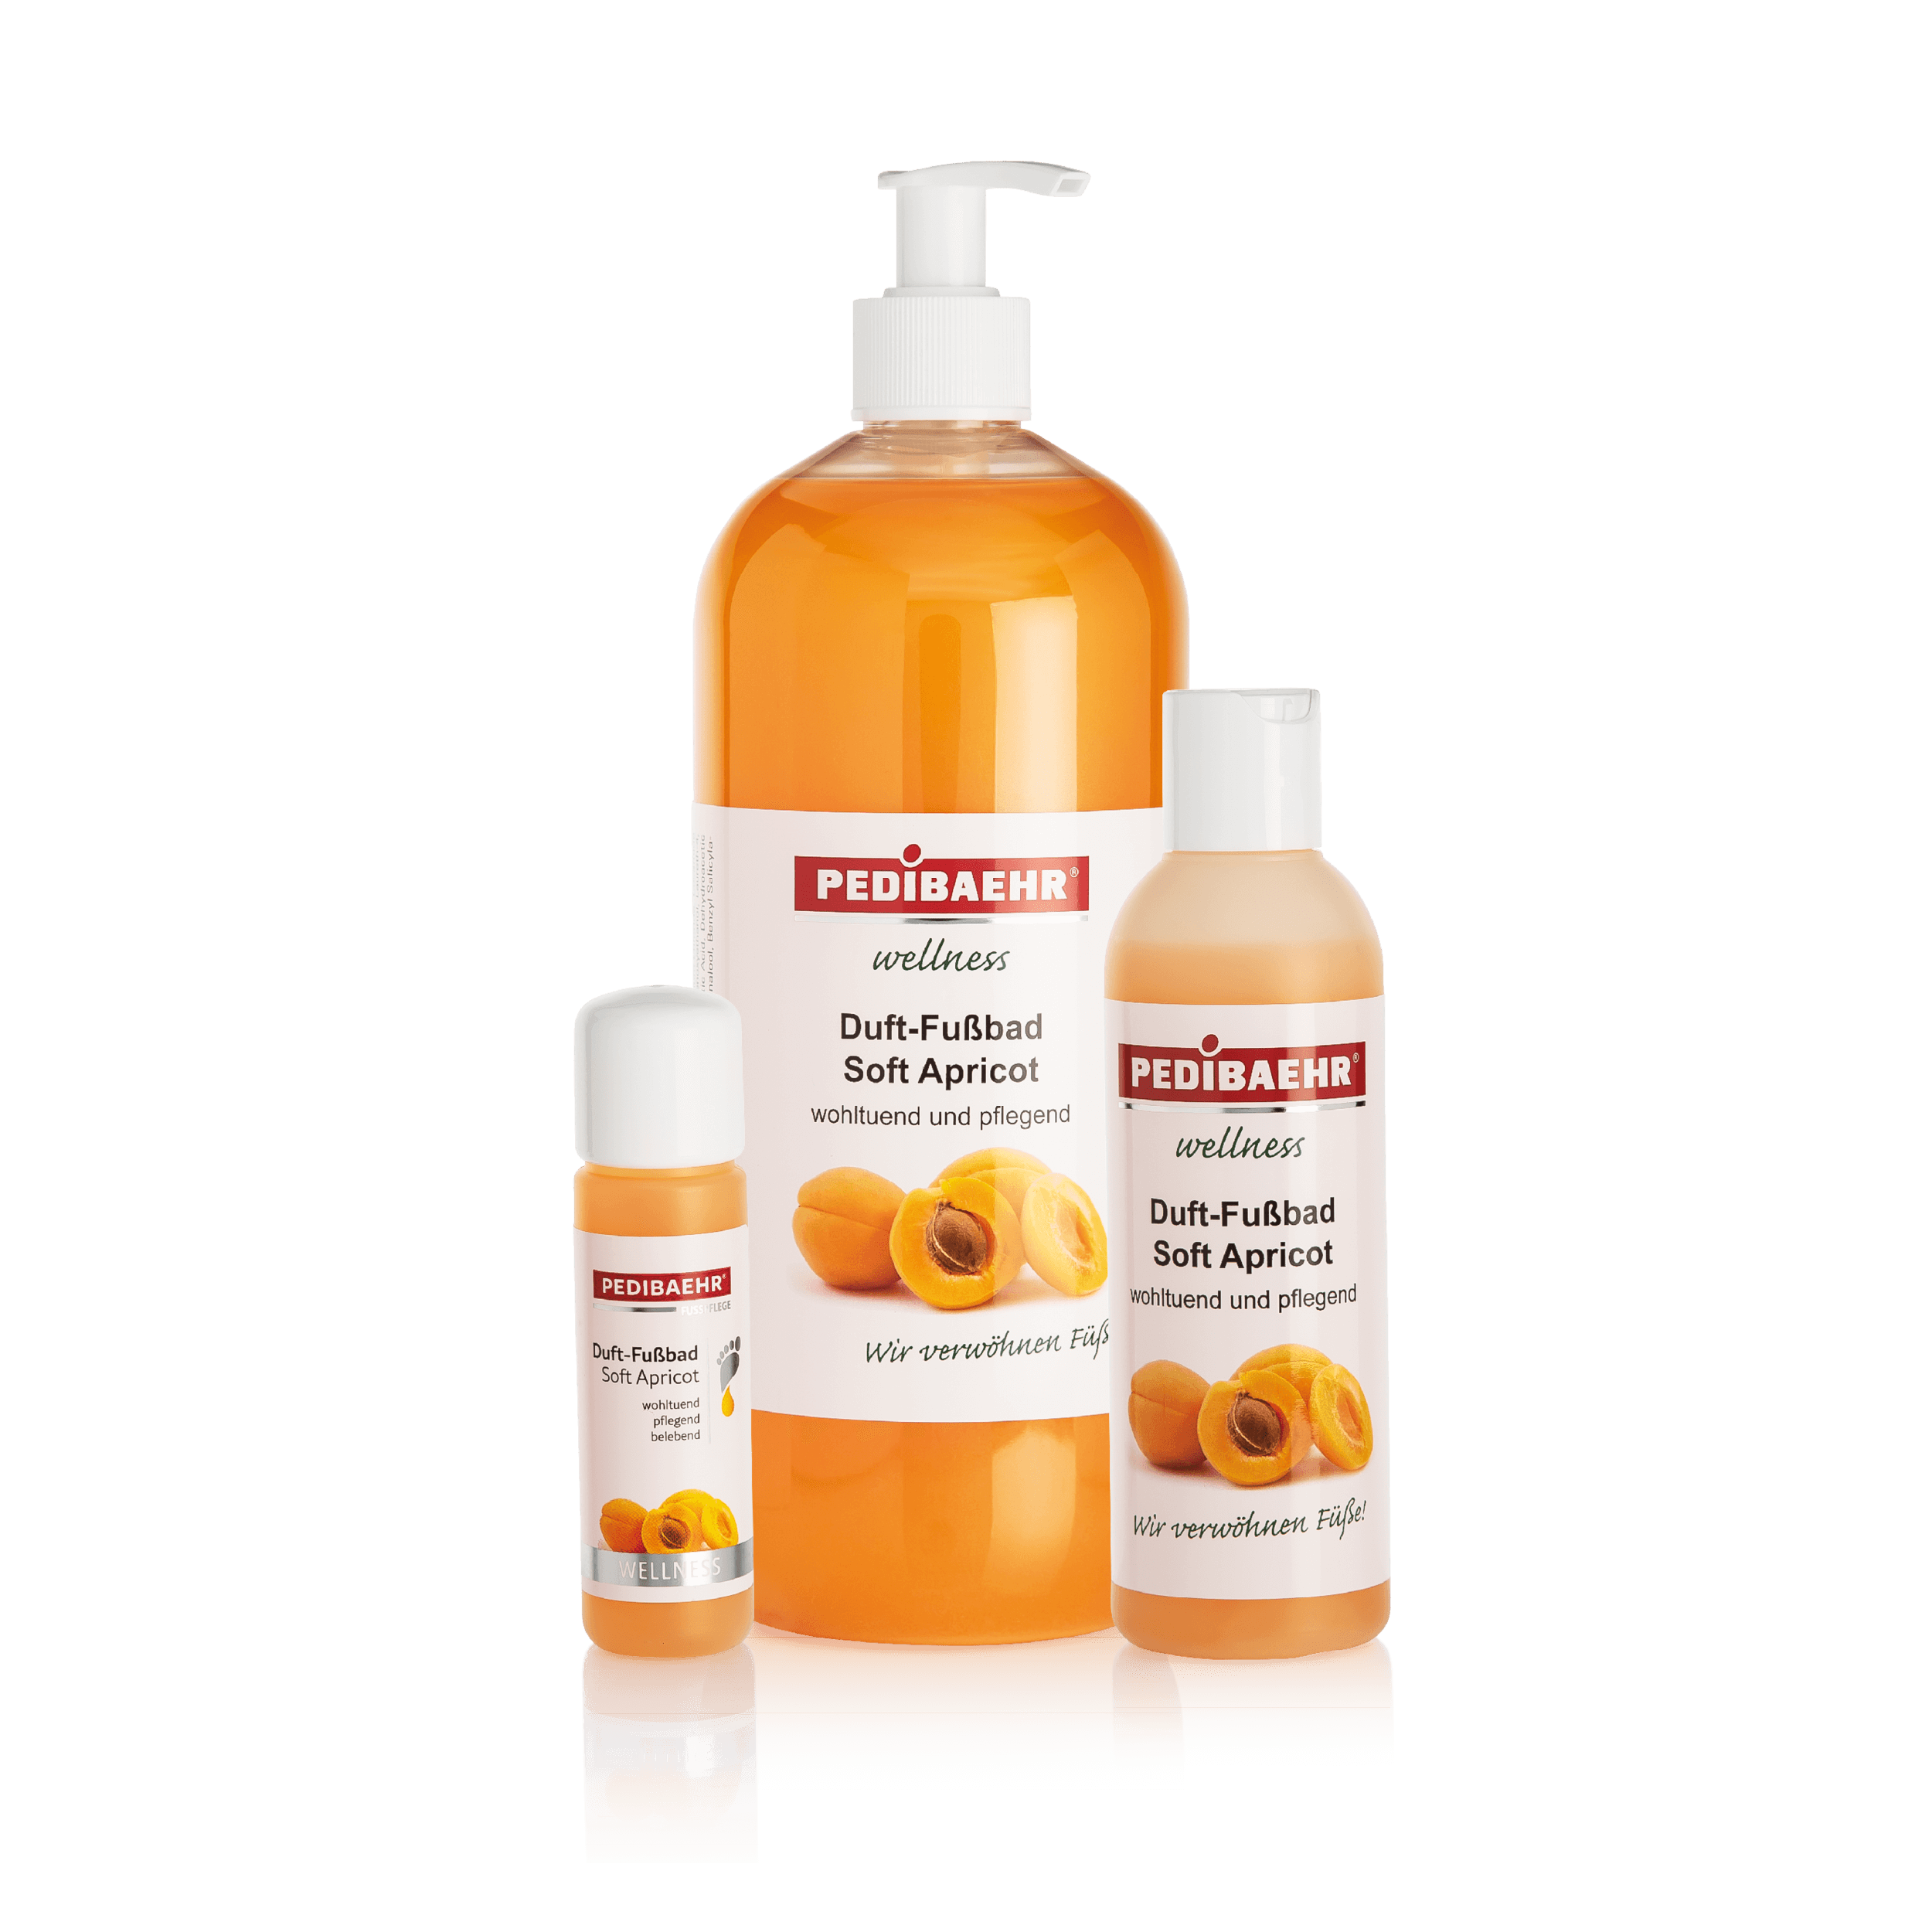 pedibaehr-wellness-duft-fubad-soft-apricot-produkt